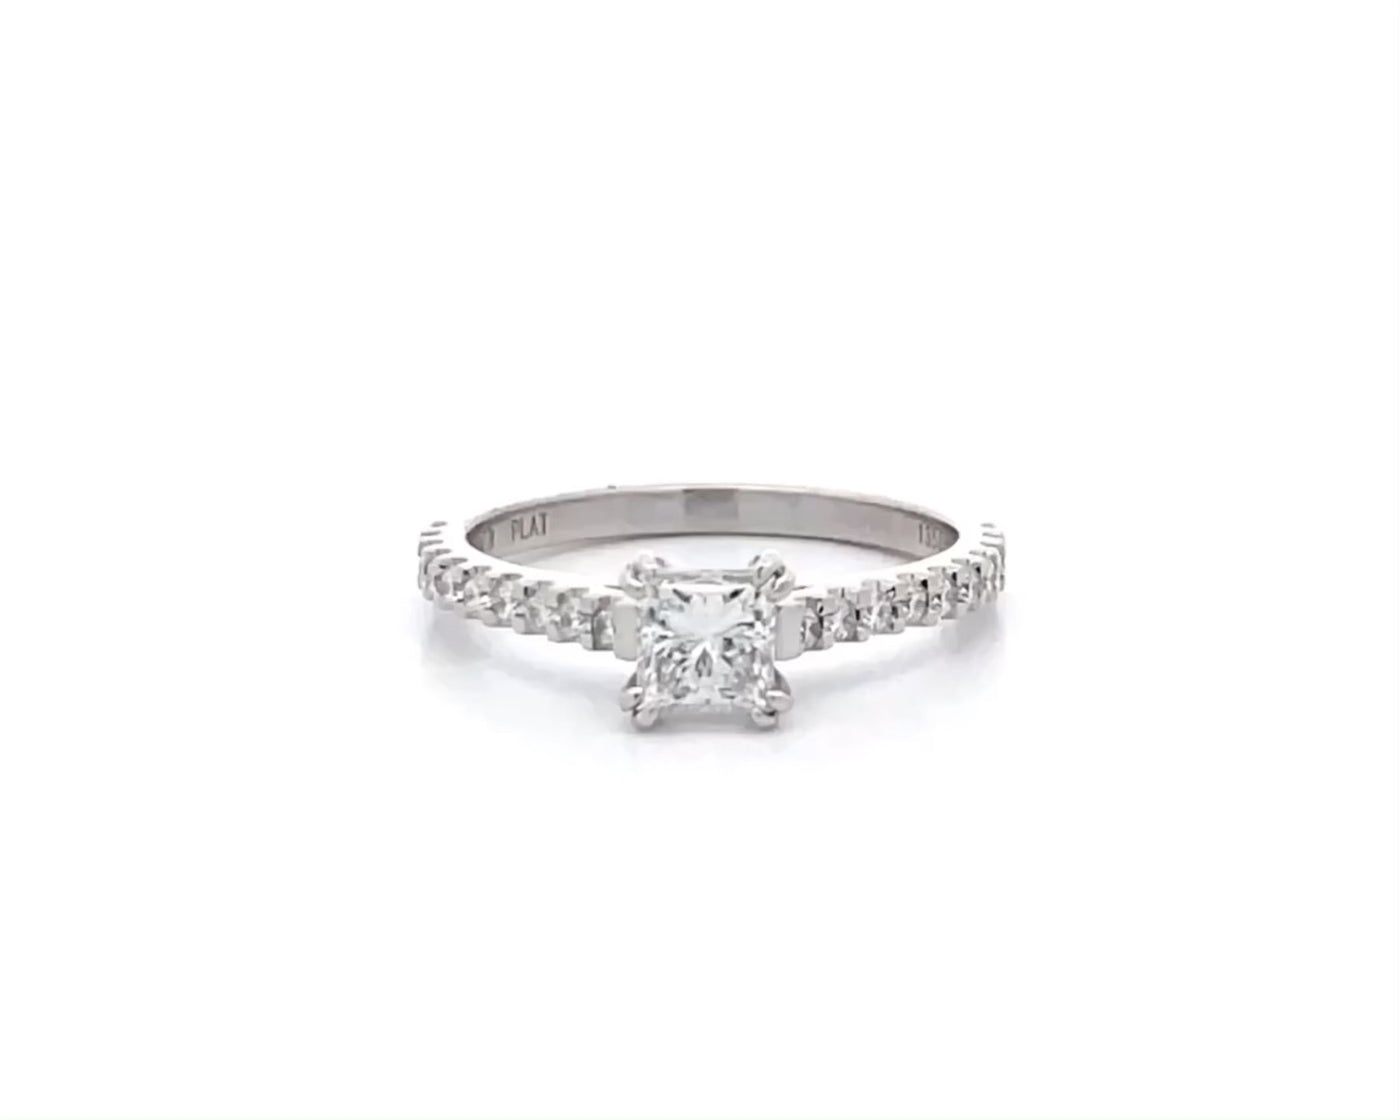 Belle: Princess Cut Diamond Solitaire Ring in platinum